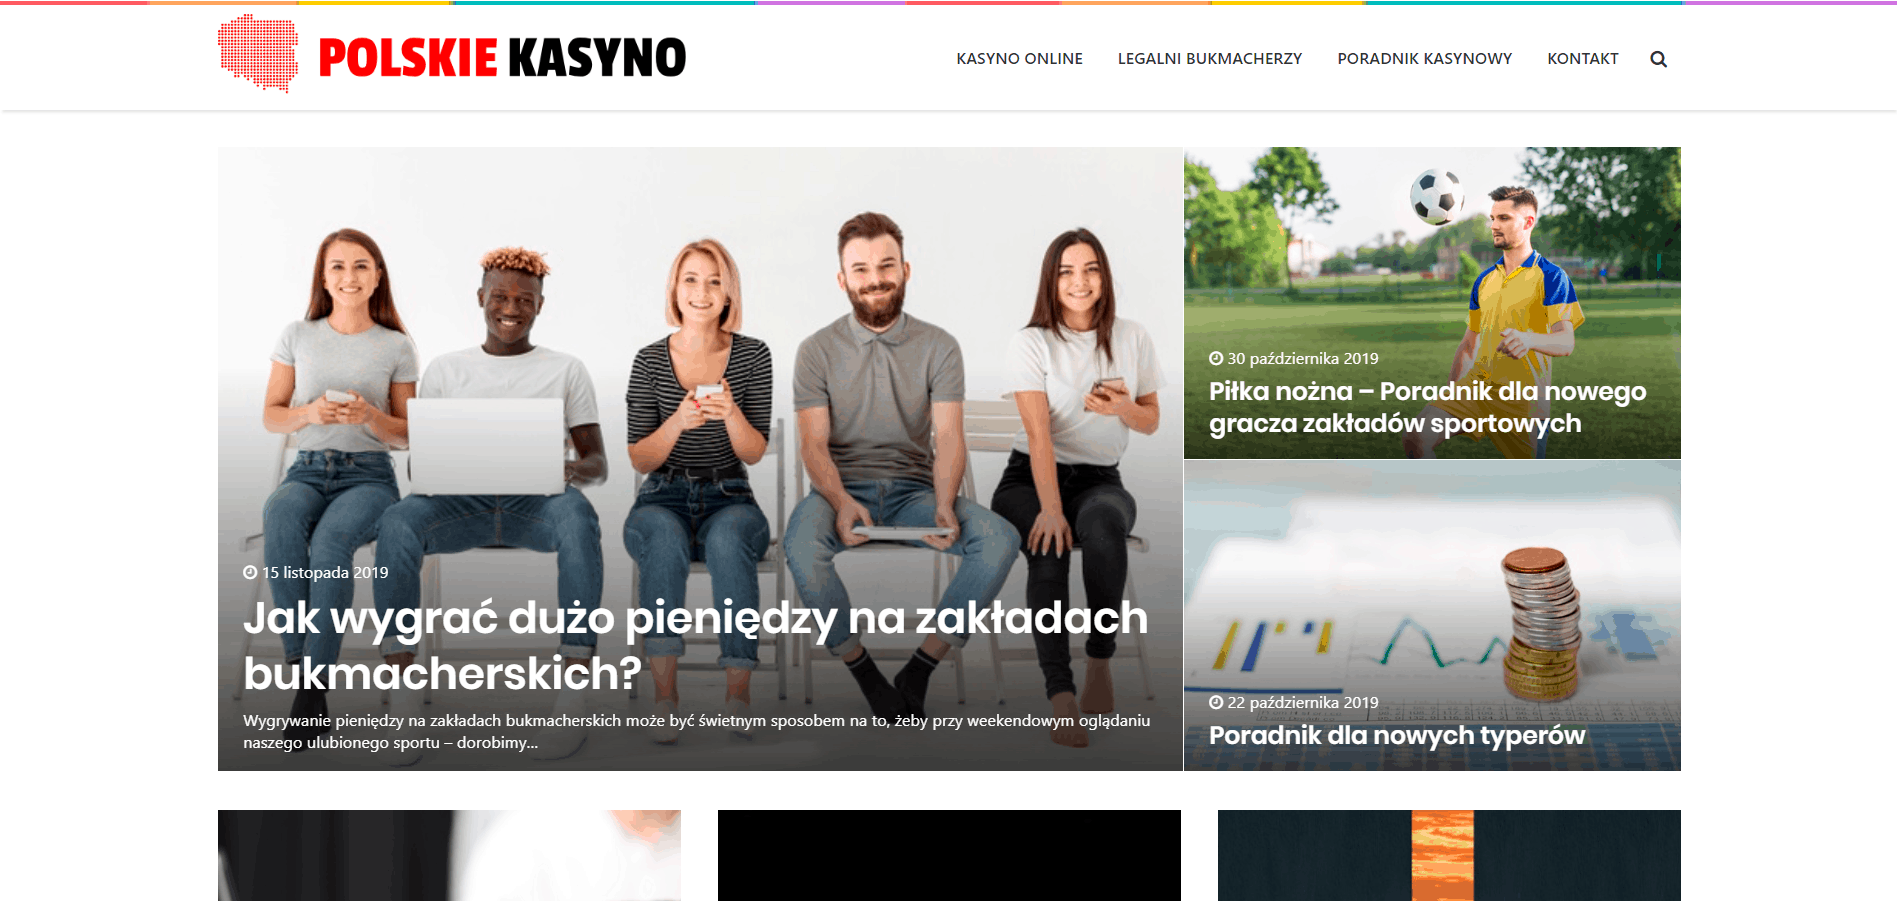 POLSKIEKASYNO.NET